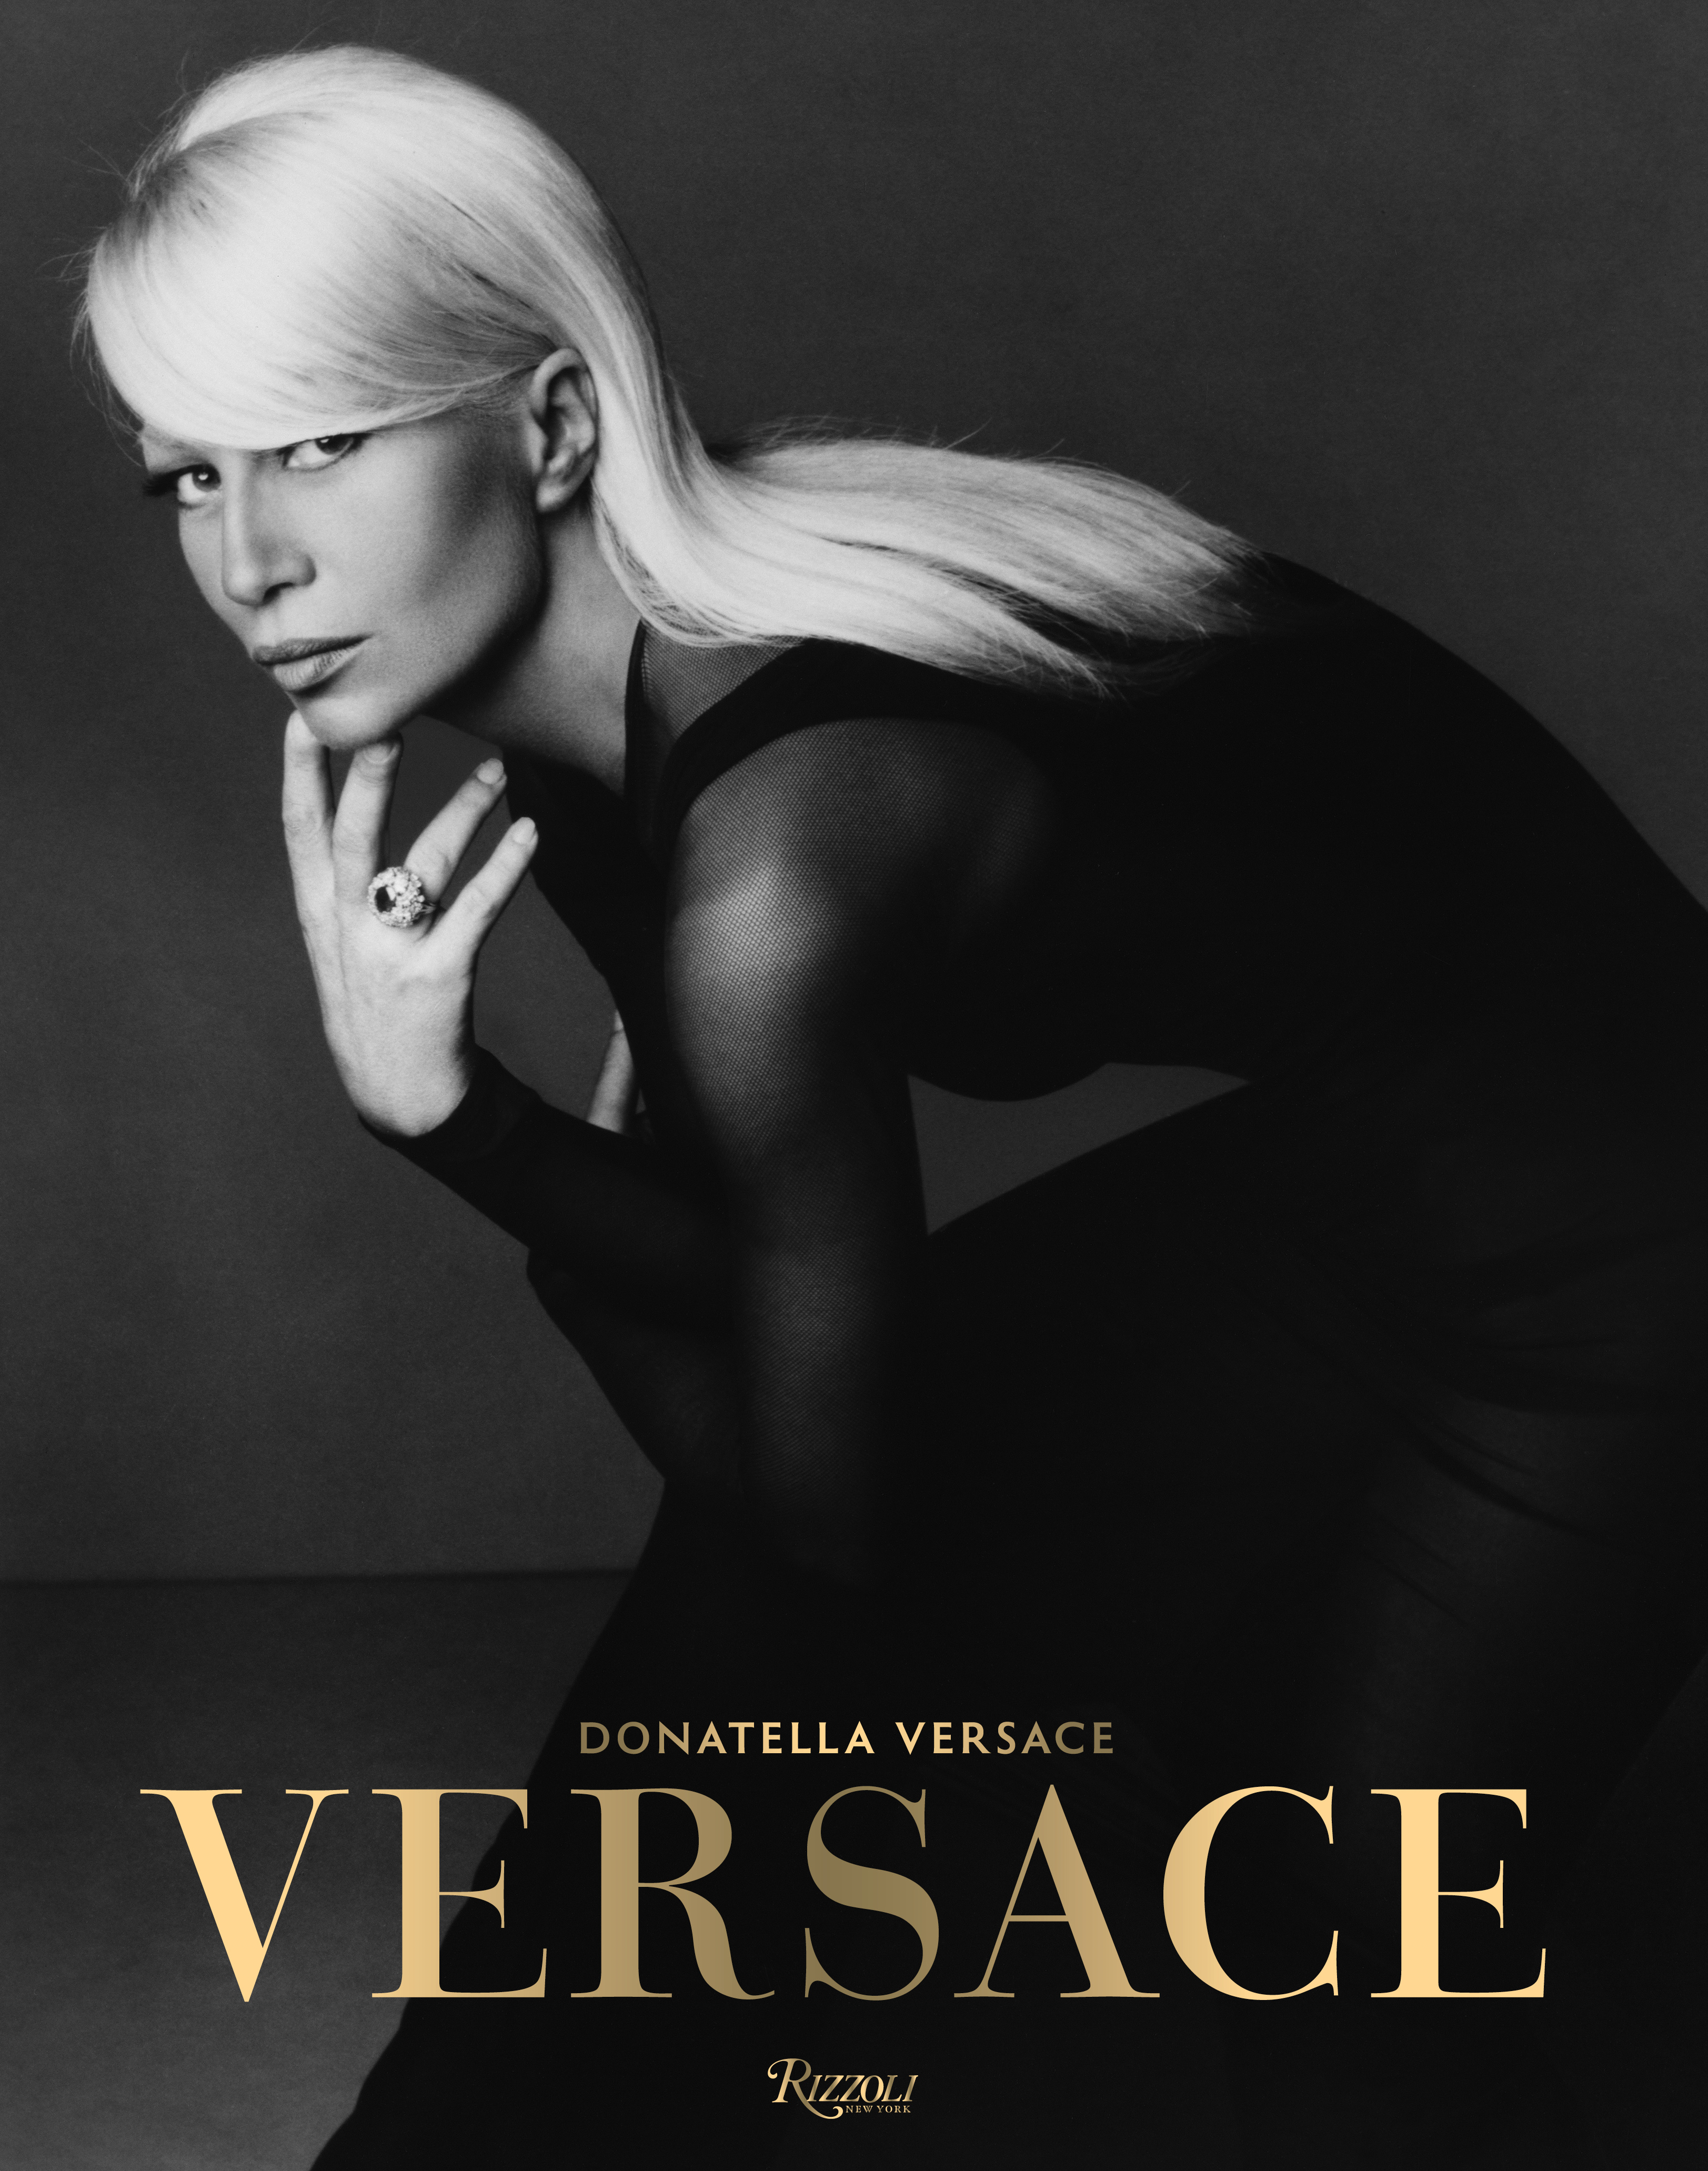 VERSACE by Donatella Versace